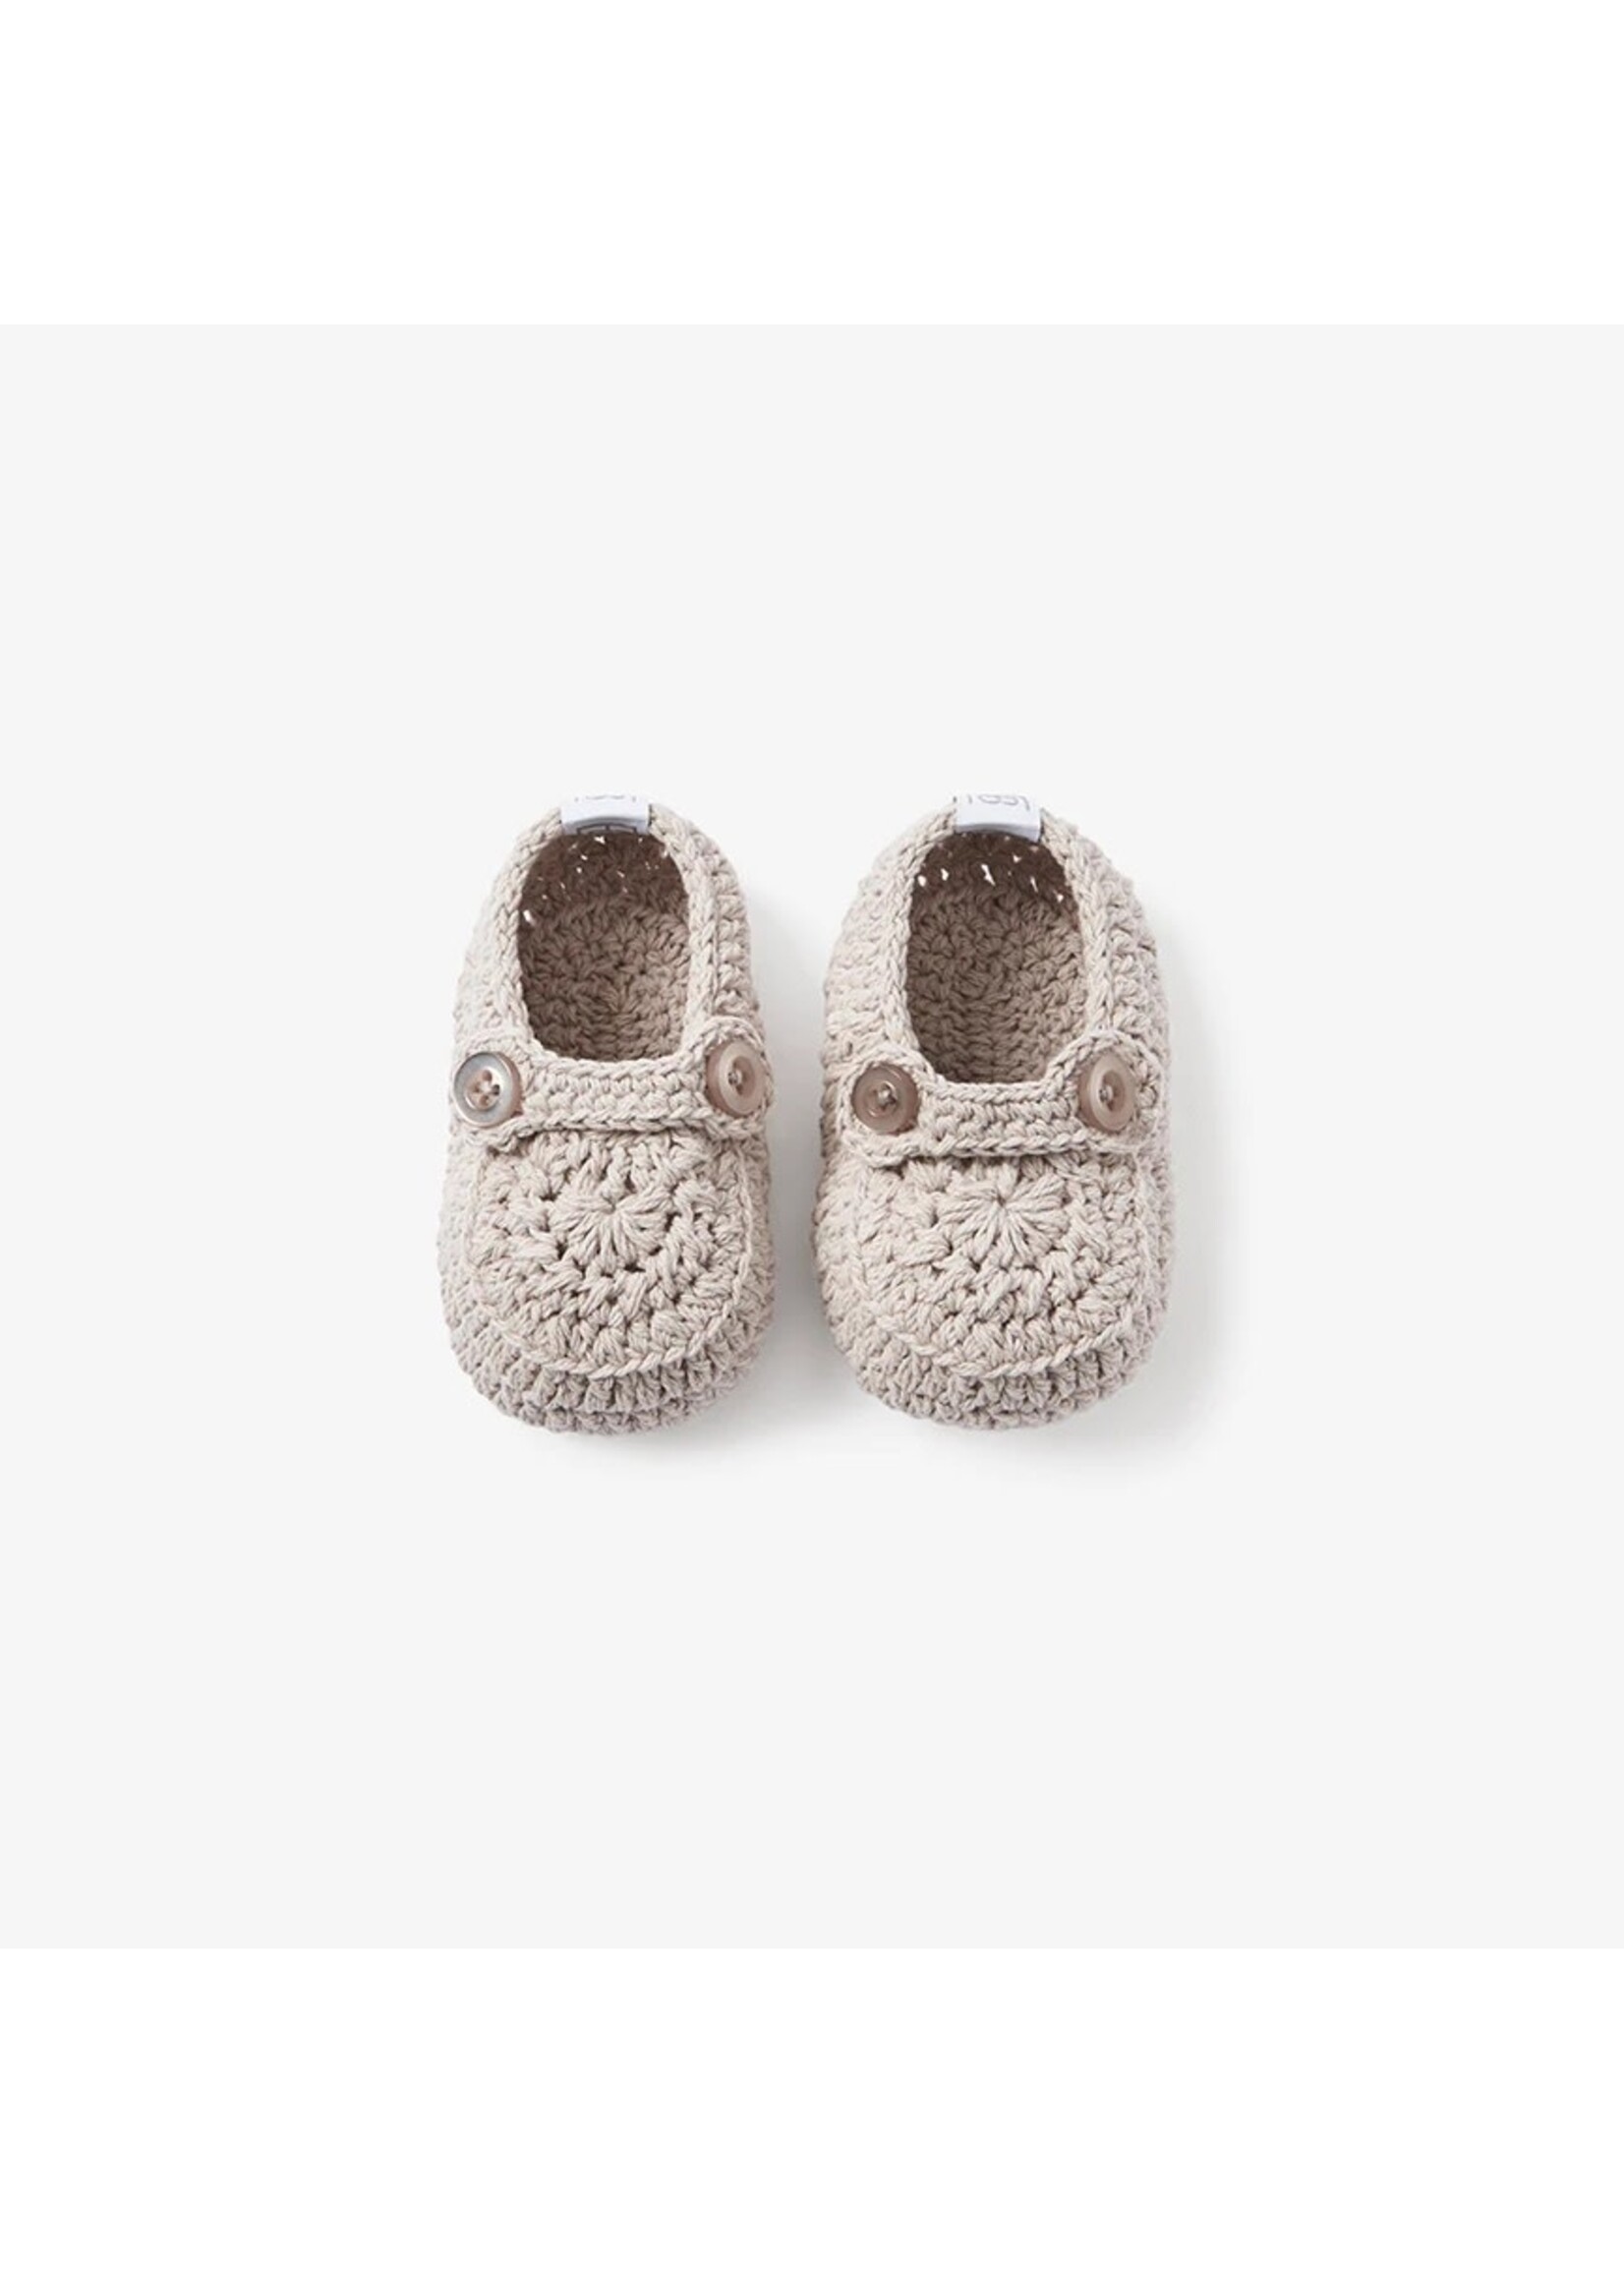 Hand Crocheted Baby Booties - Grey